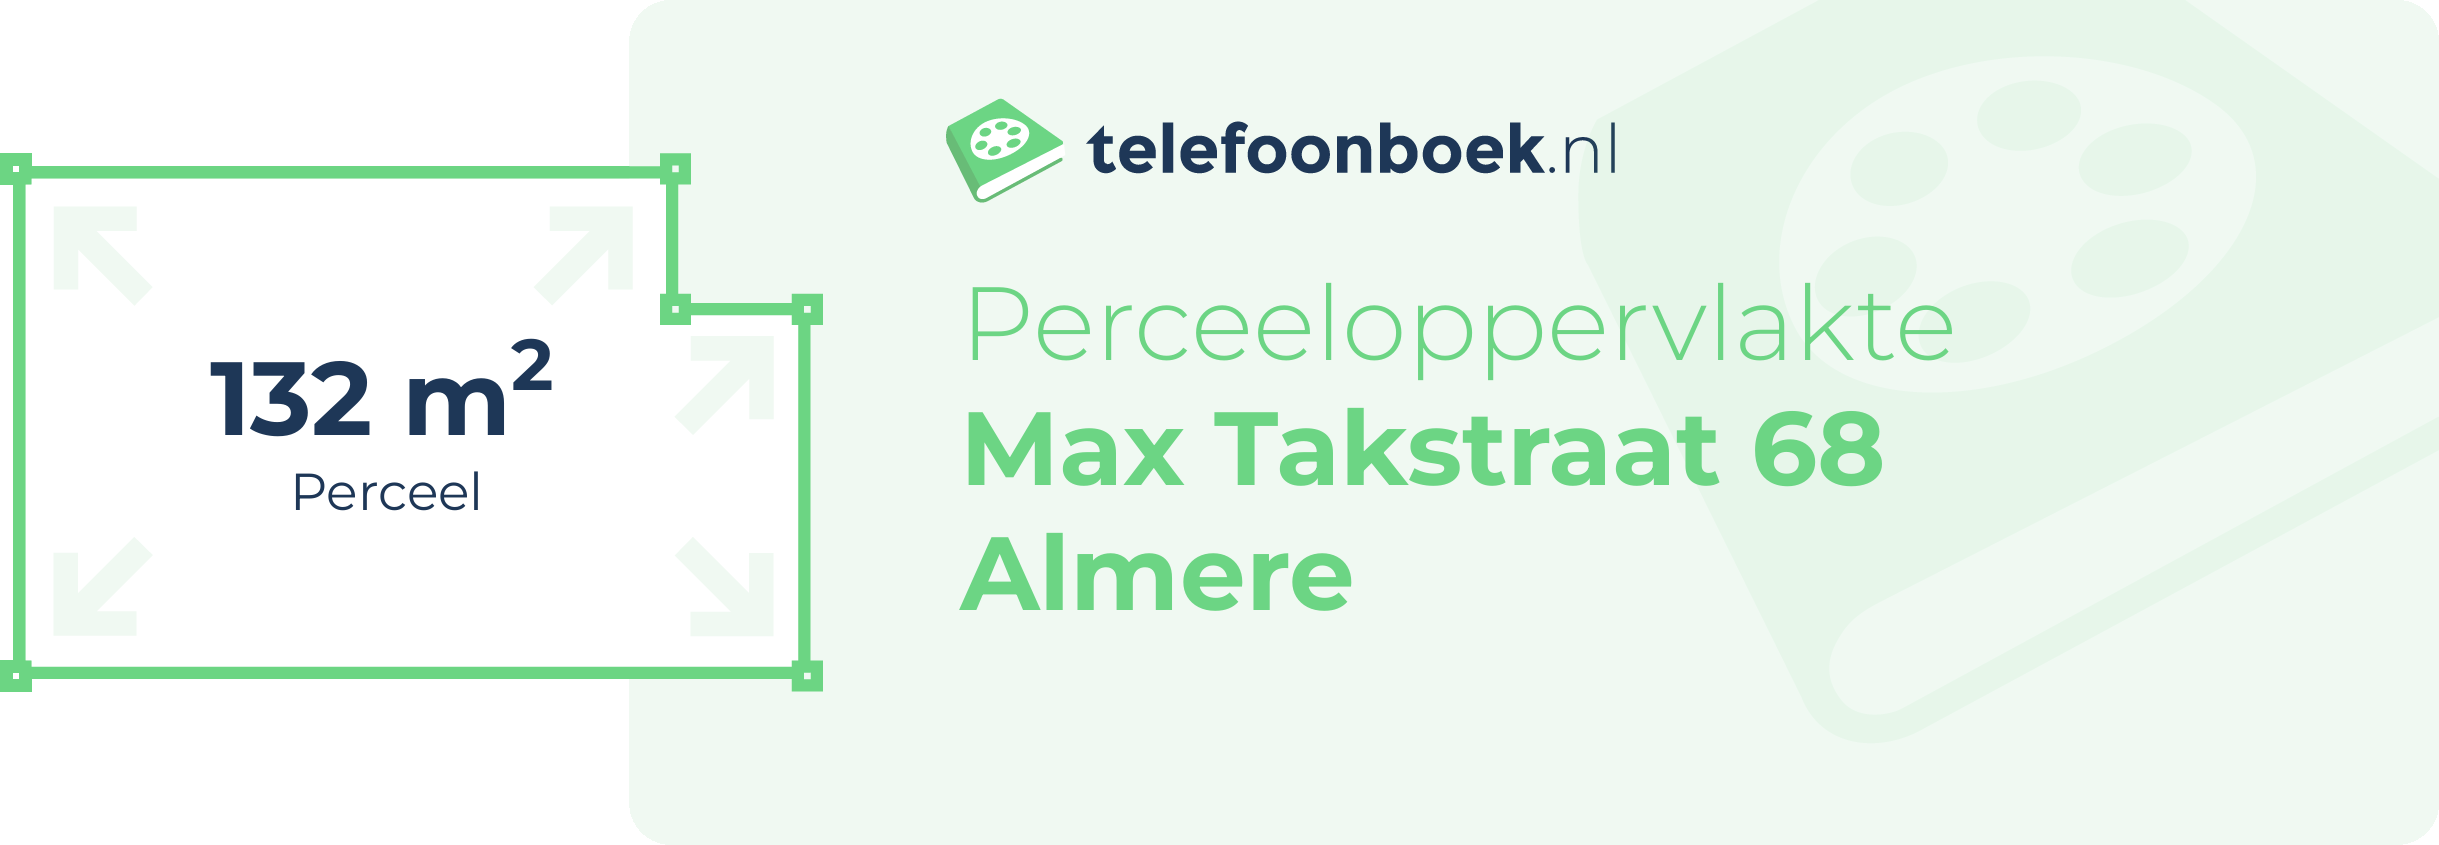 Perceeloppervlakte Max Takstraat 68 Almere